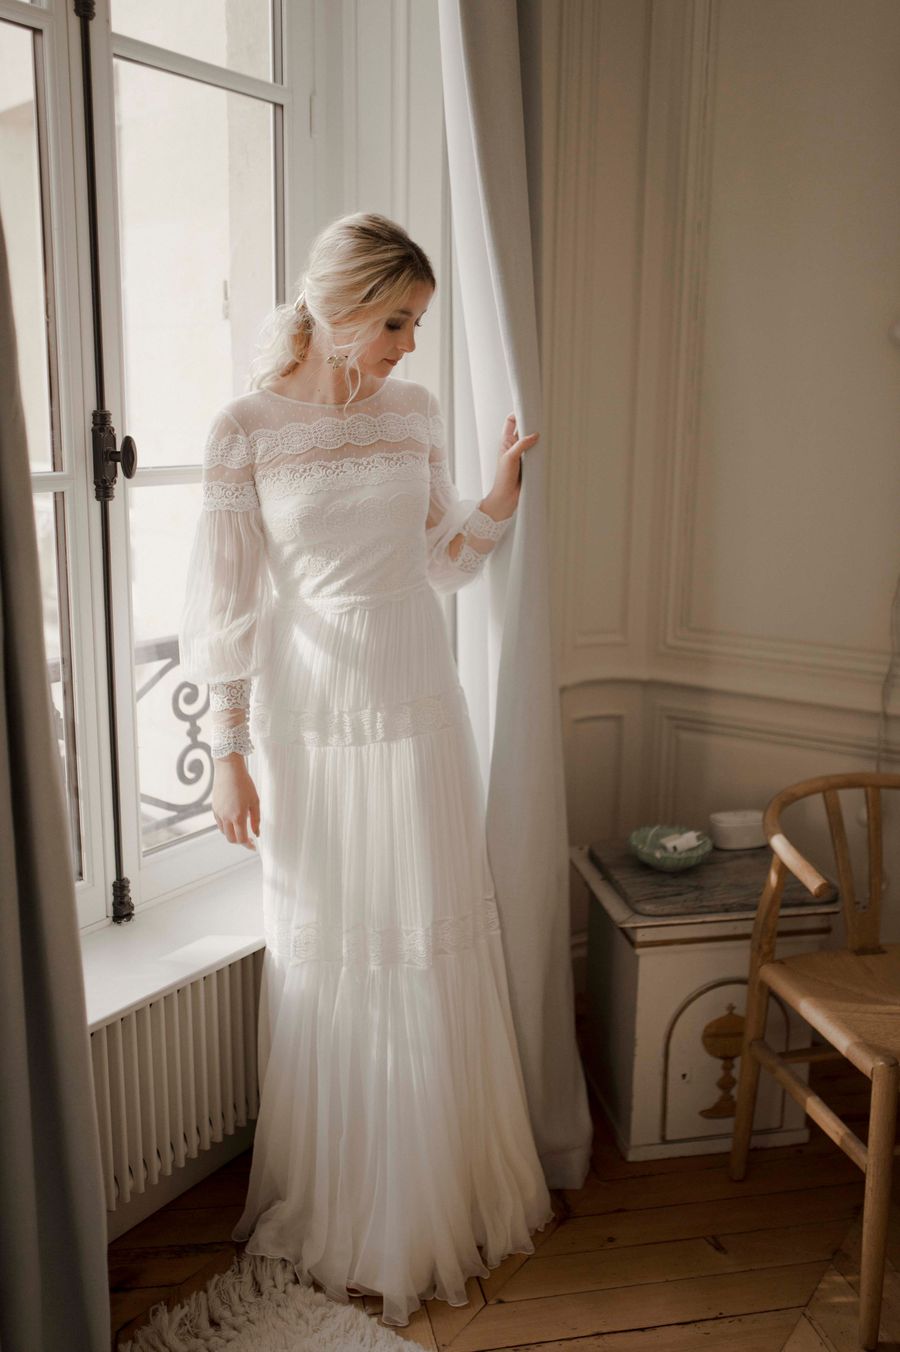 Le Wedding Magazine - Blog - Vrai Mariage - ©Solveig & Ronan Photographes